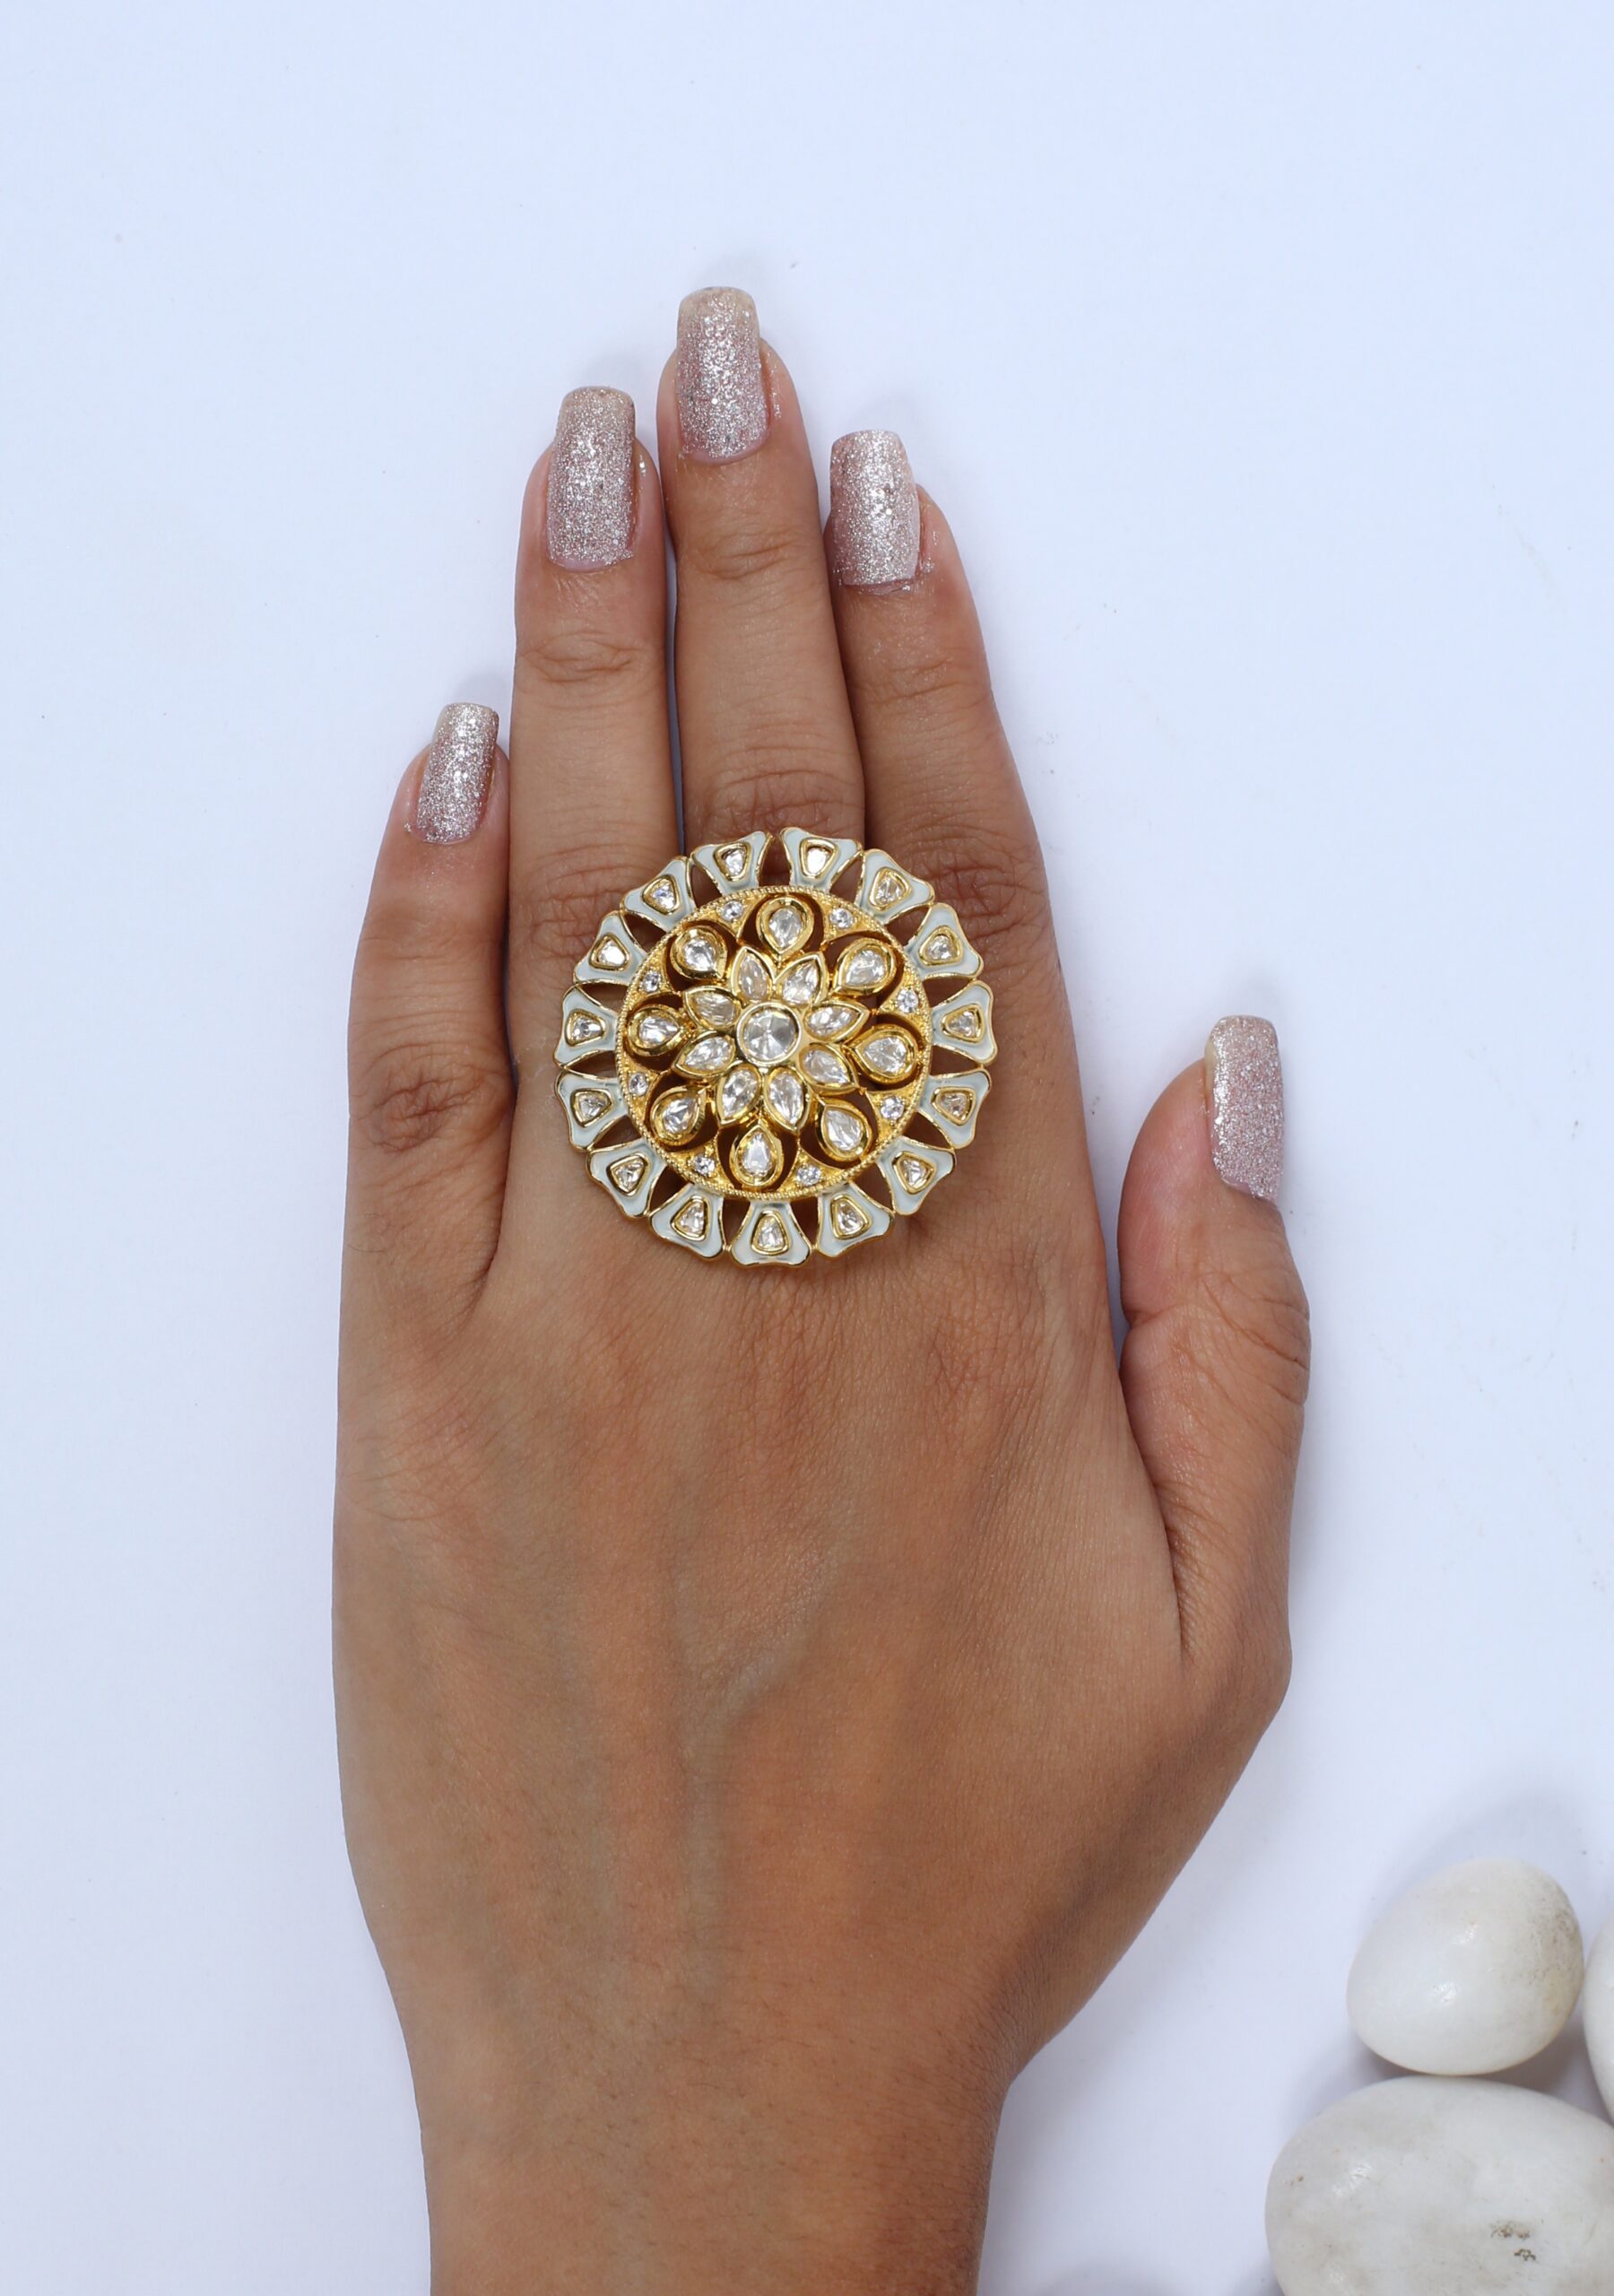 Shop Latest Indian Jewellery Rings | Shforn